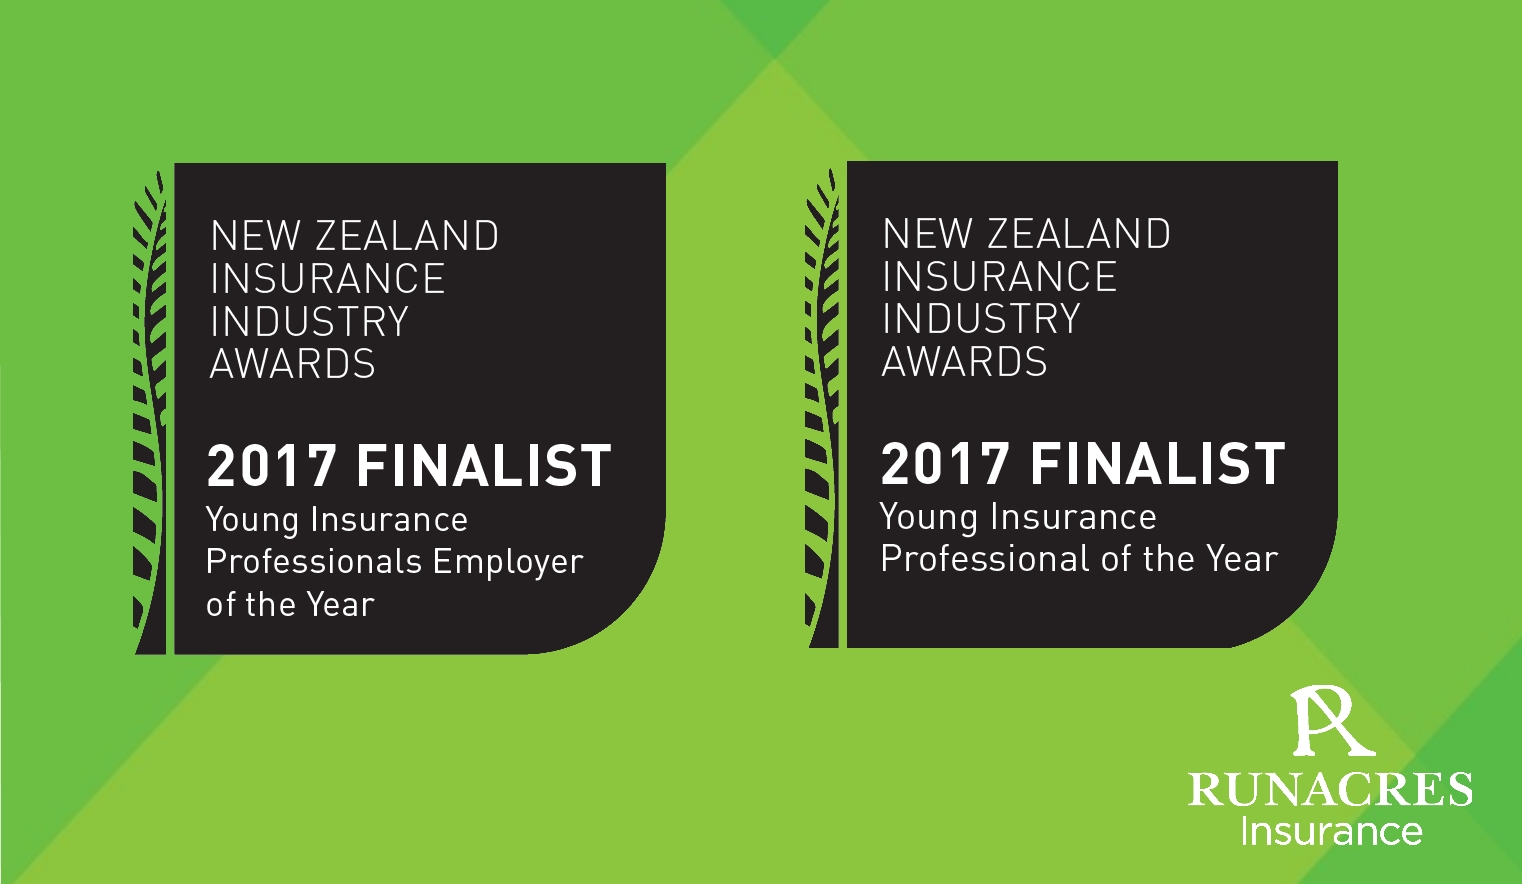 Runacres Insurance finalists in NZ Insurance Industry Awards